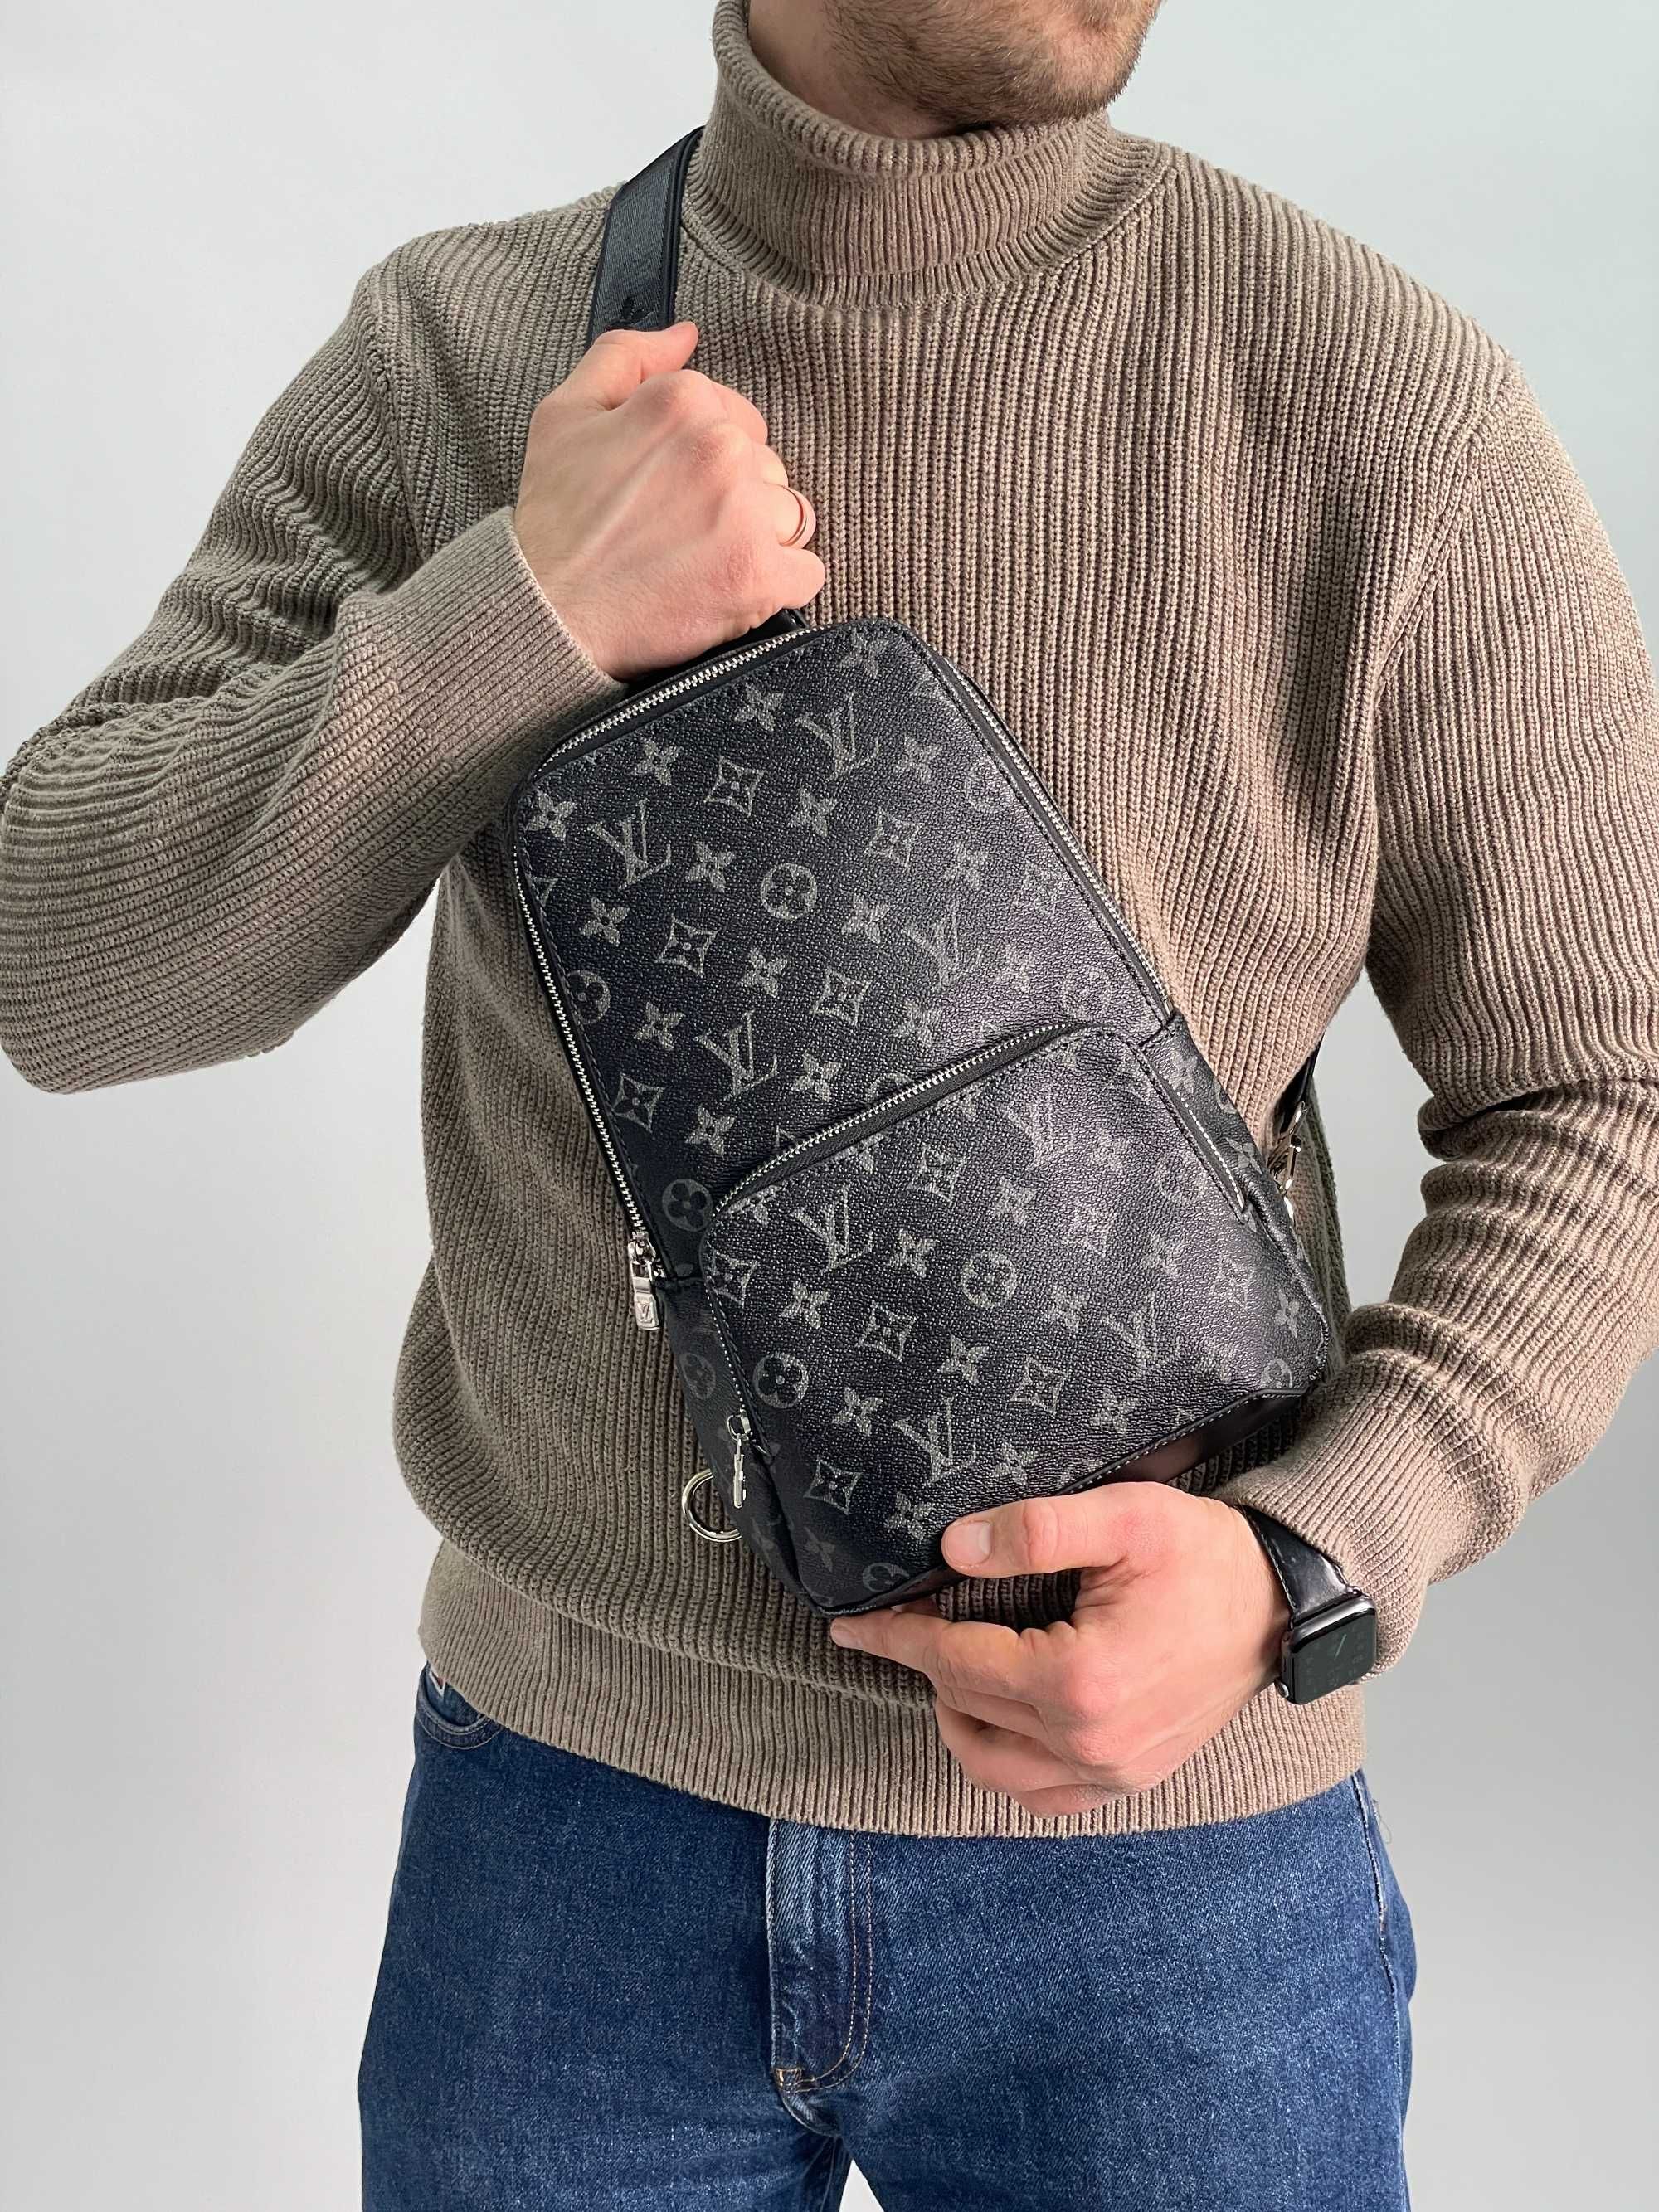 Мужская сумка Louis Vuitton чоловіча сумка бананка через плече